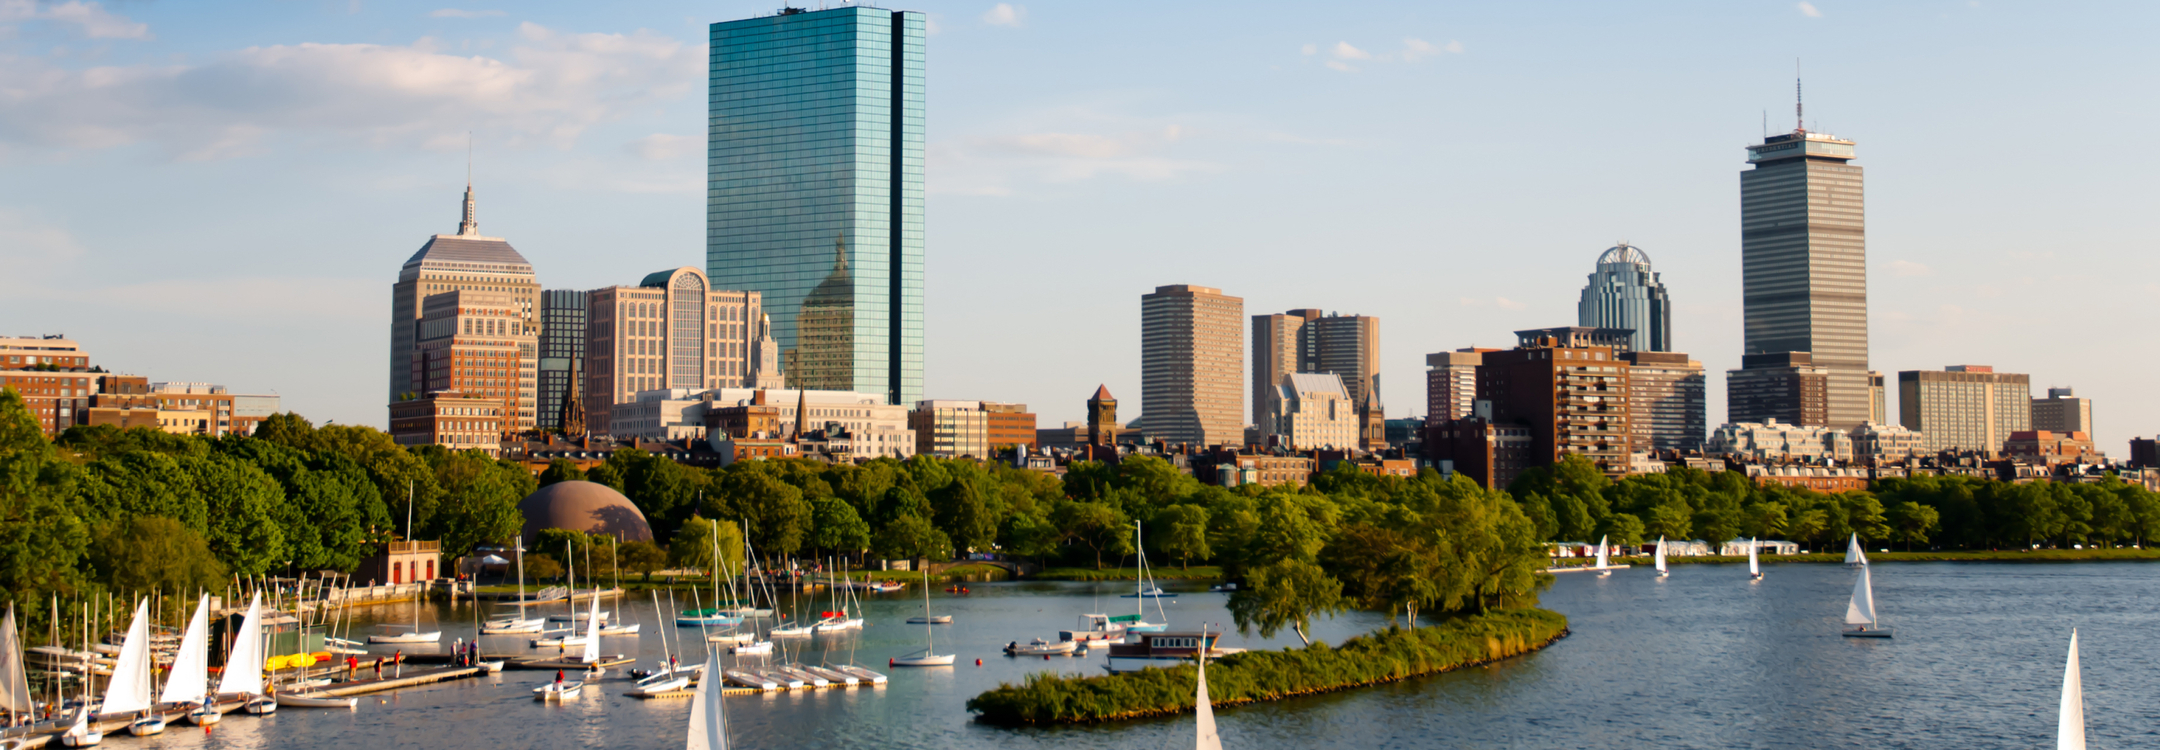 Boston skyline and harbor